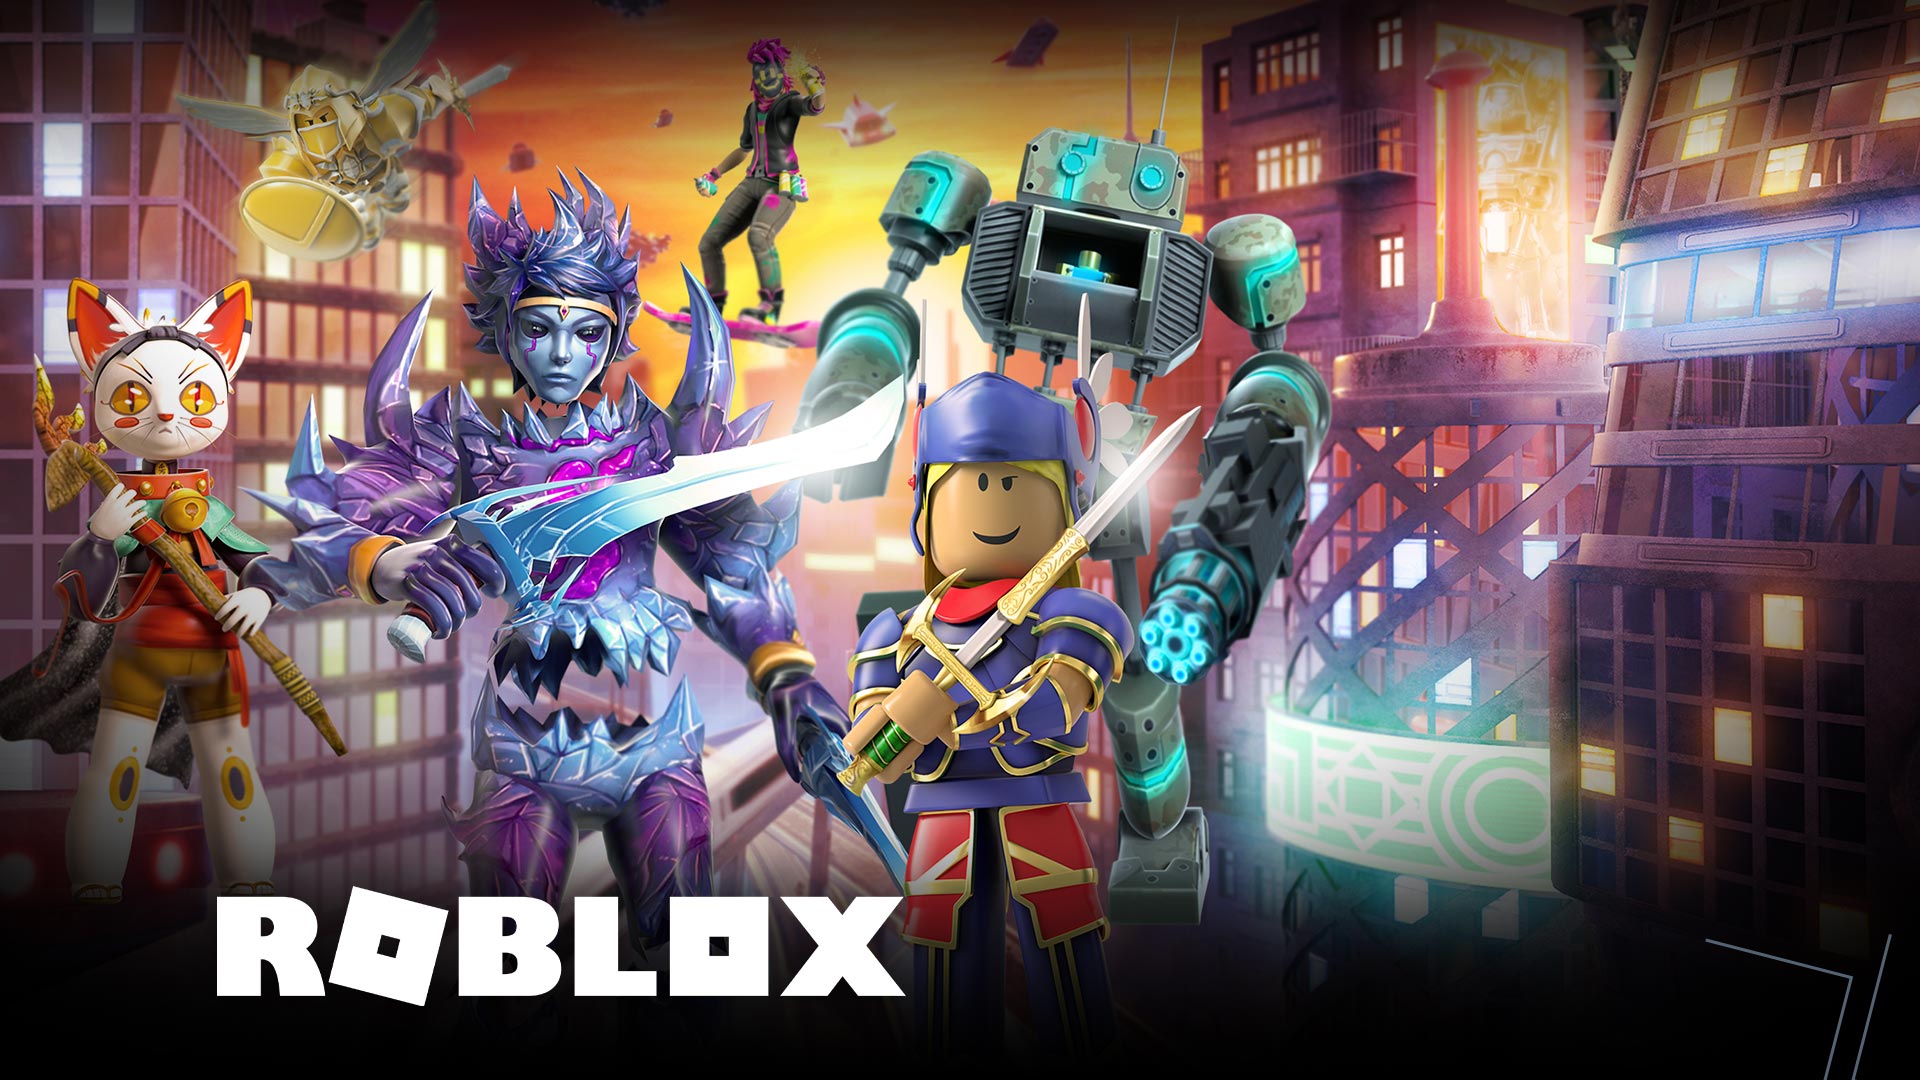 Roblox Wallpaper Explore more Corporation., Movement, Online game, Play  Games, Program Games wallpaper.